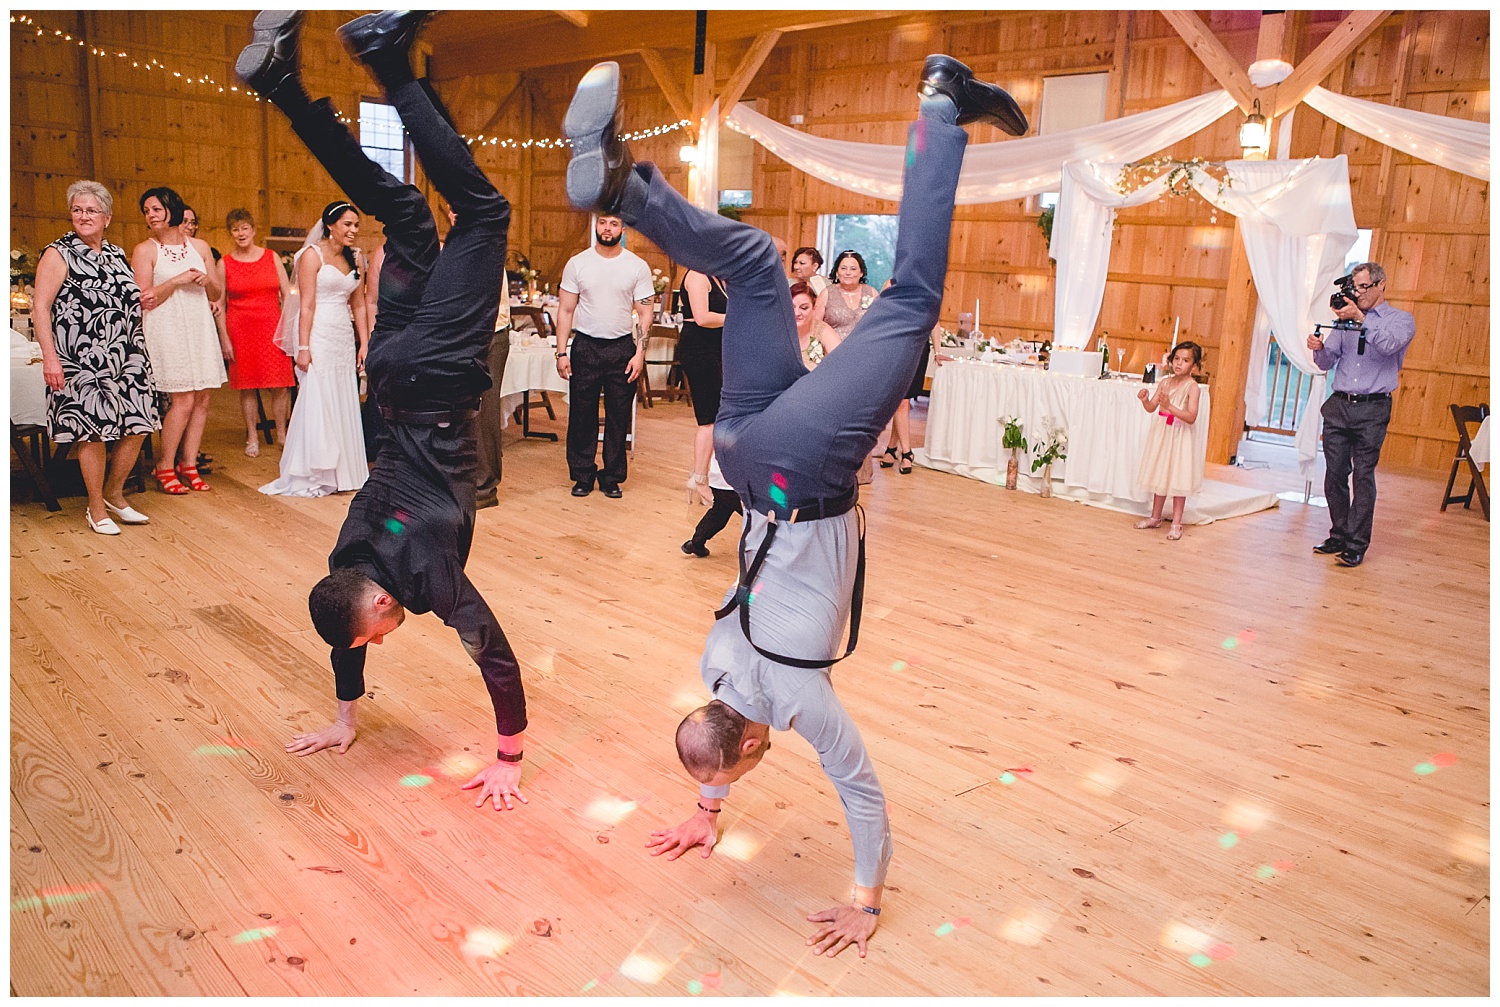 breakdancers at wedding reception